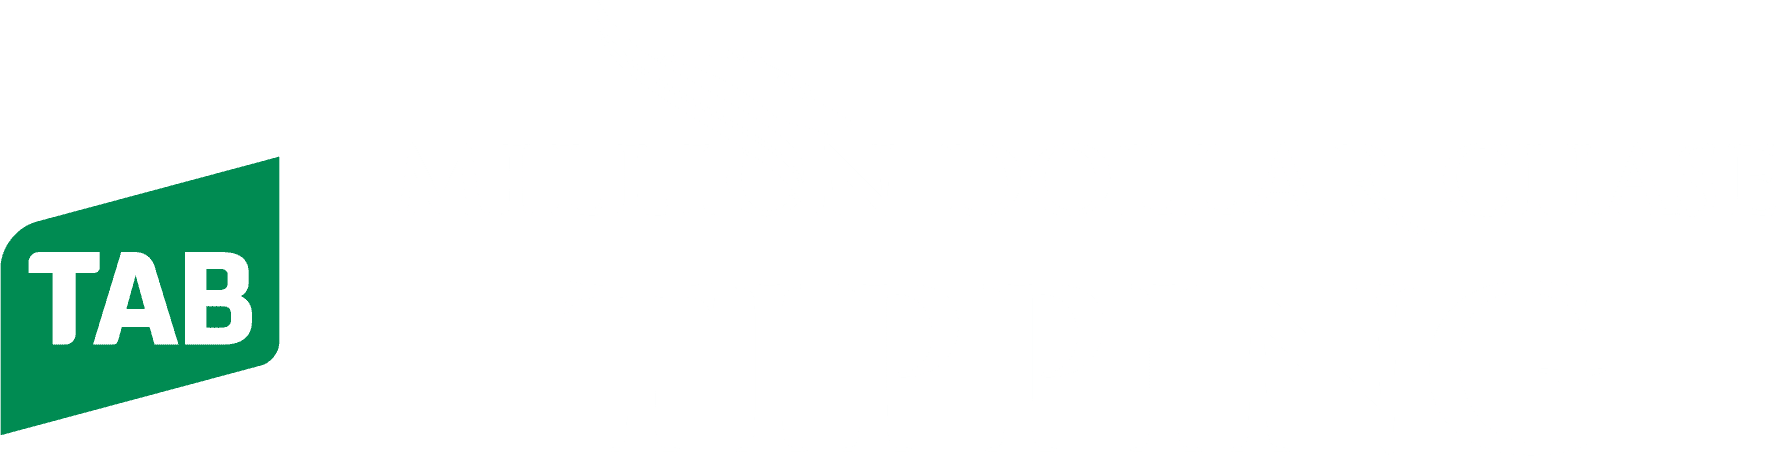 Million Dollar Chase Tipping Logo